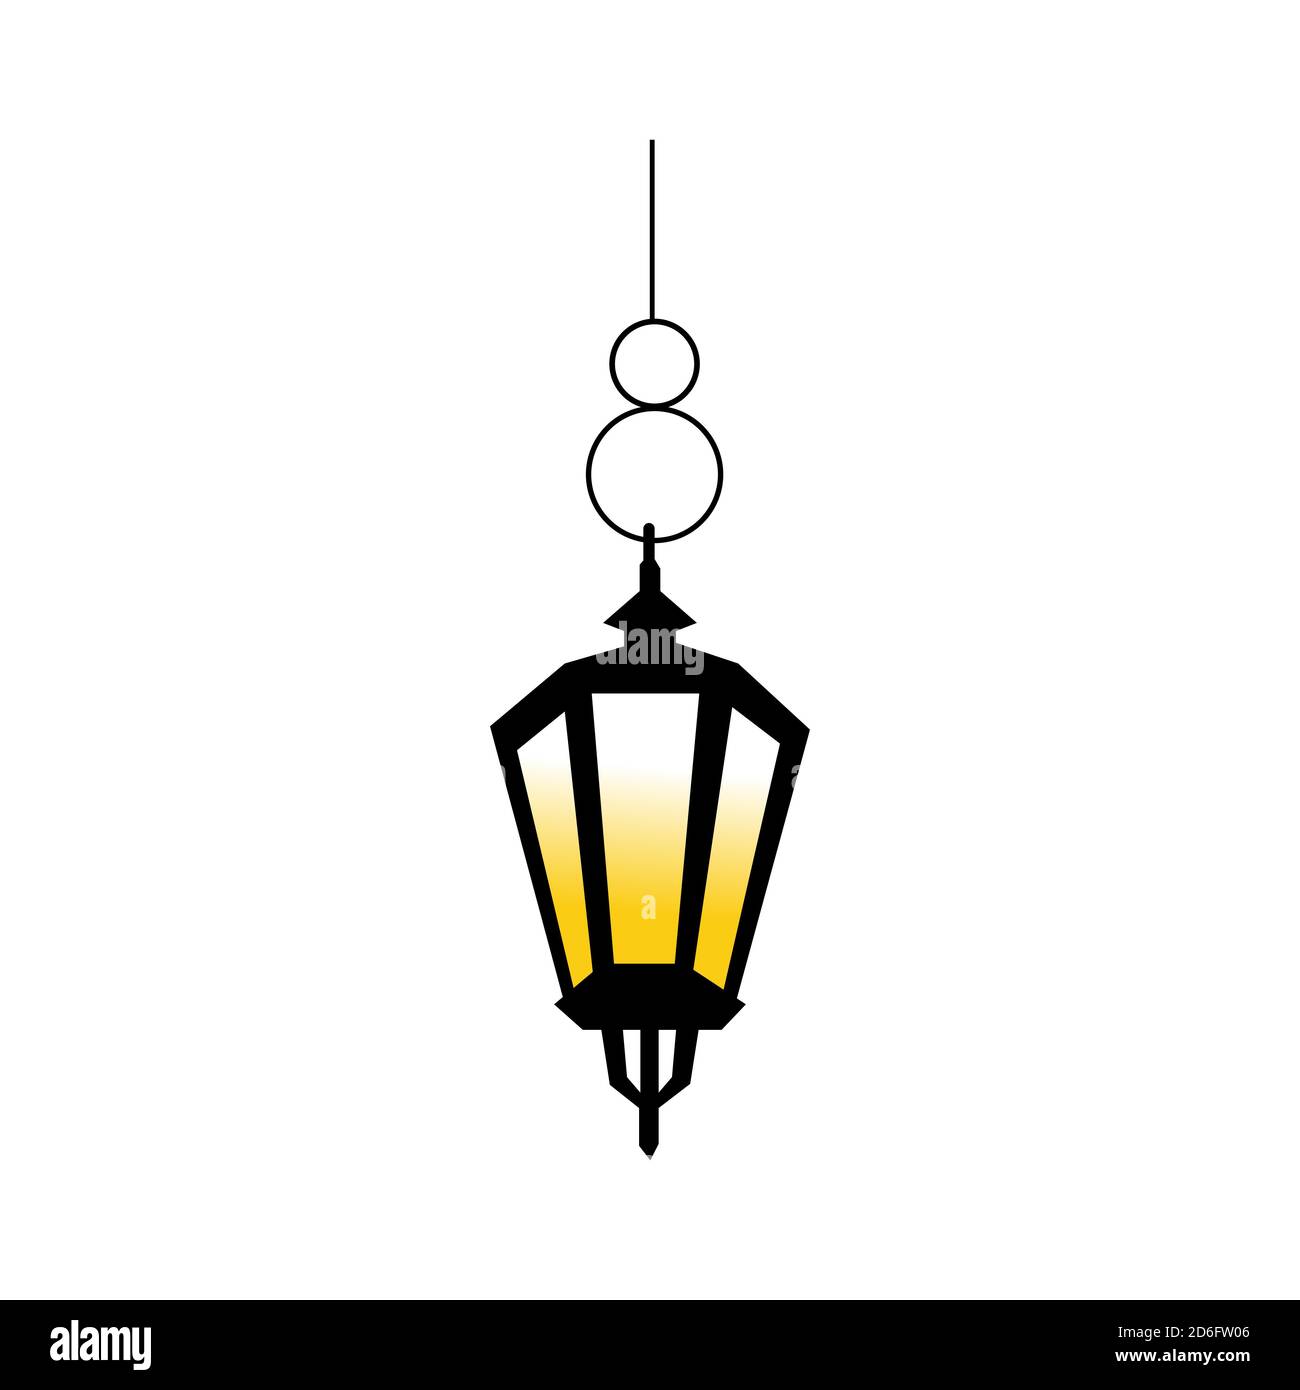 lantern logo design vector illustrations beautiful traditional ornamental lights template Stock Vector